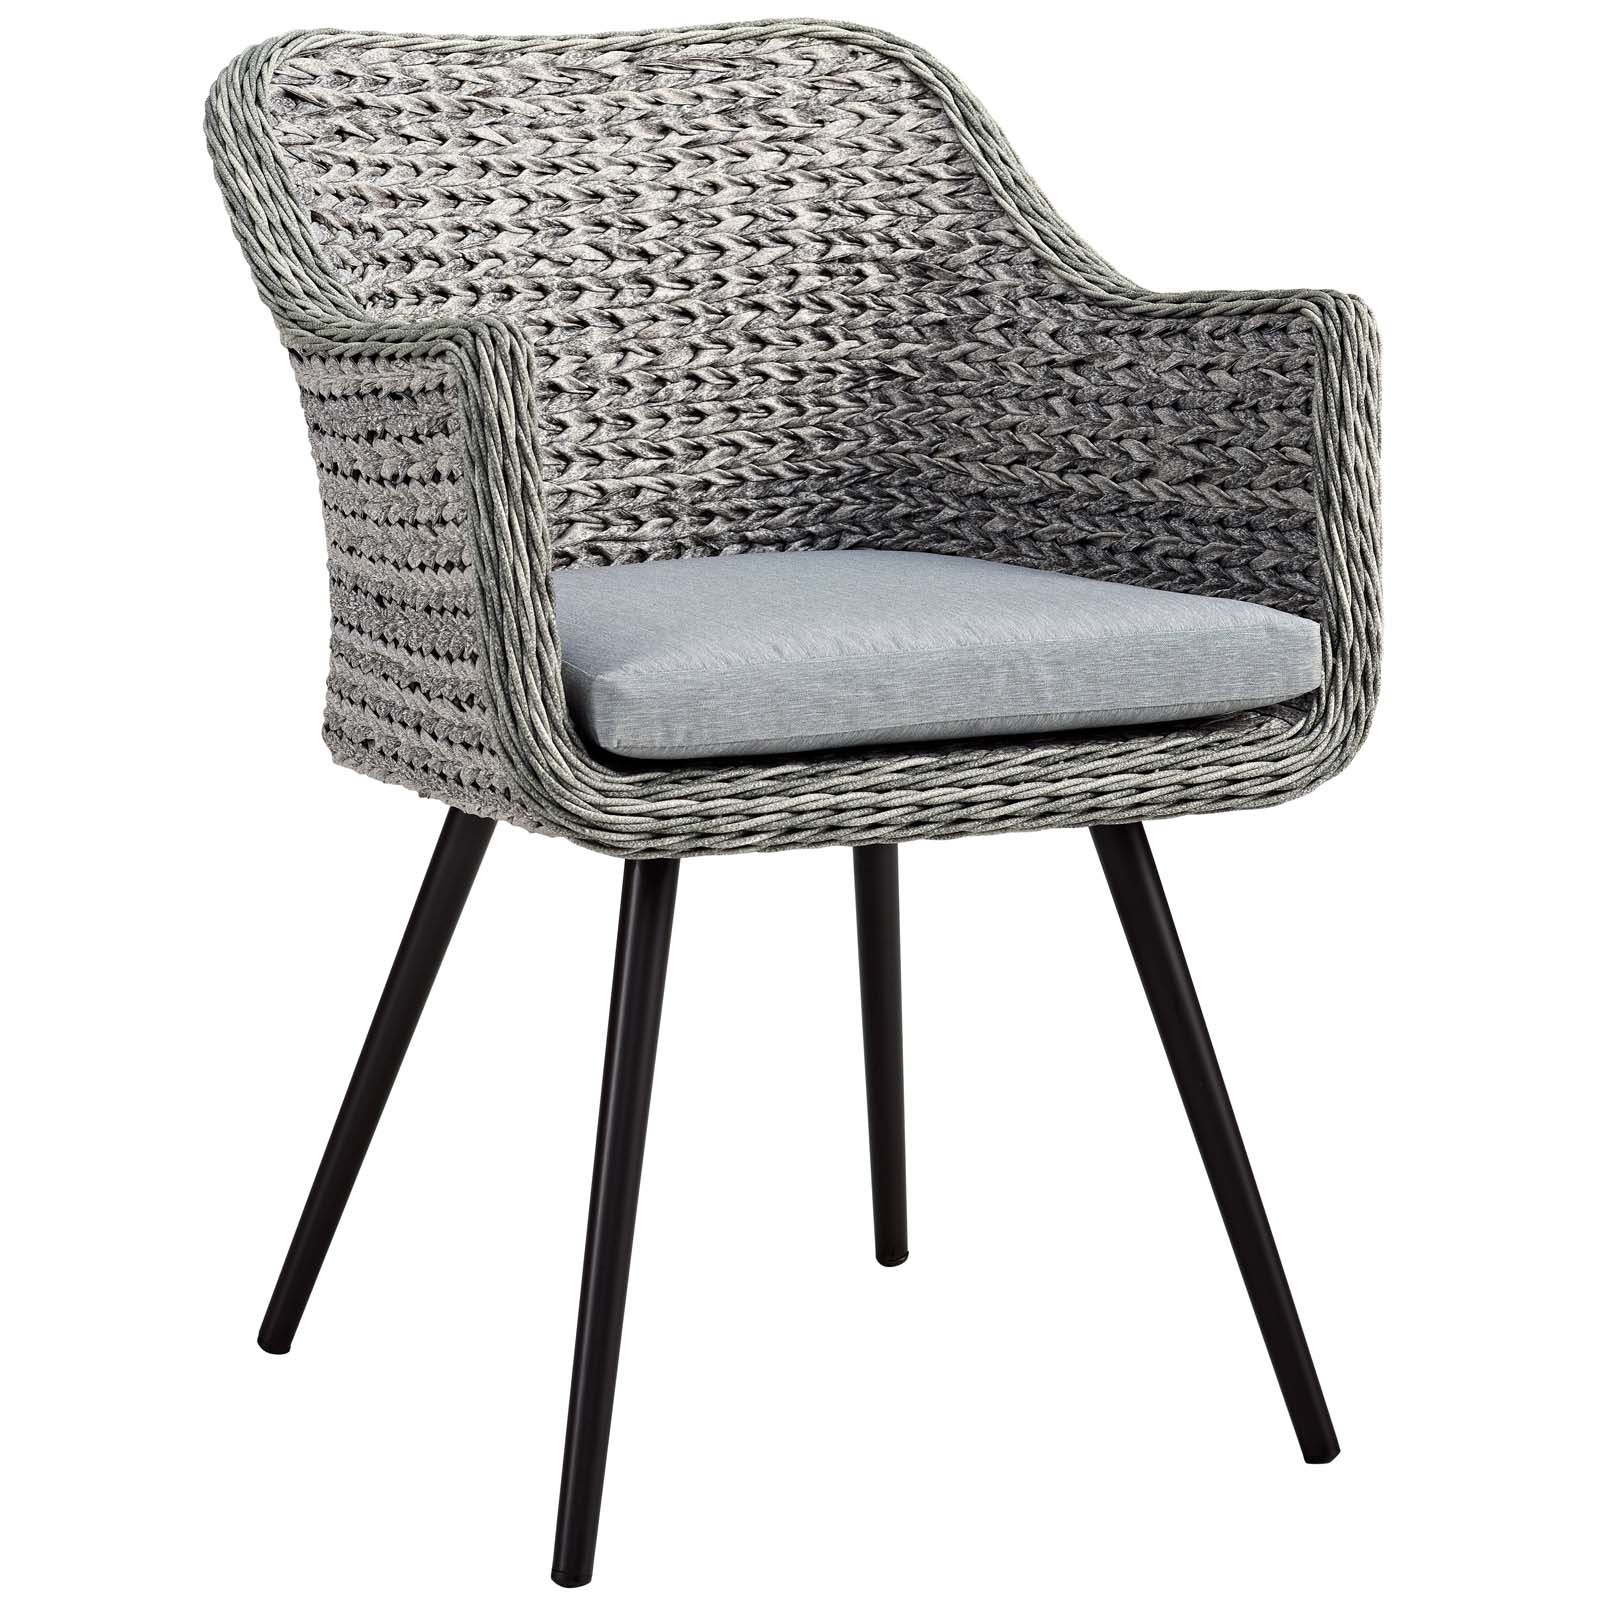 Modern Contemporary Urban Design Outdoor Patio Balcony Garden Furniture Lounge Chair Armchair, Set of Two, Rattan Wicker, Grey Gray - image 5 of 6